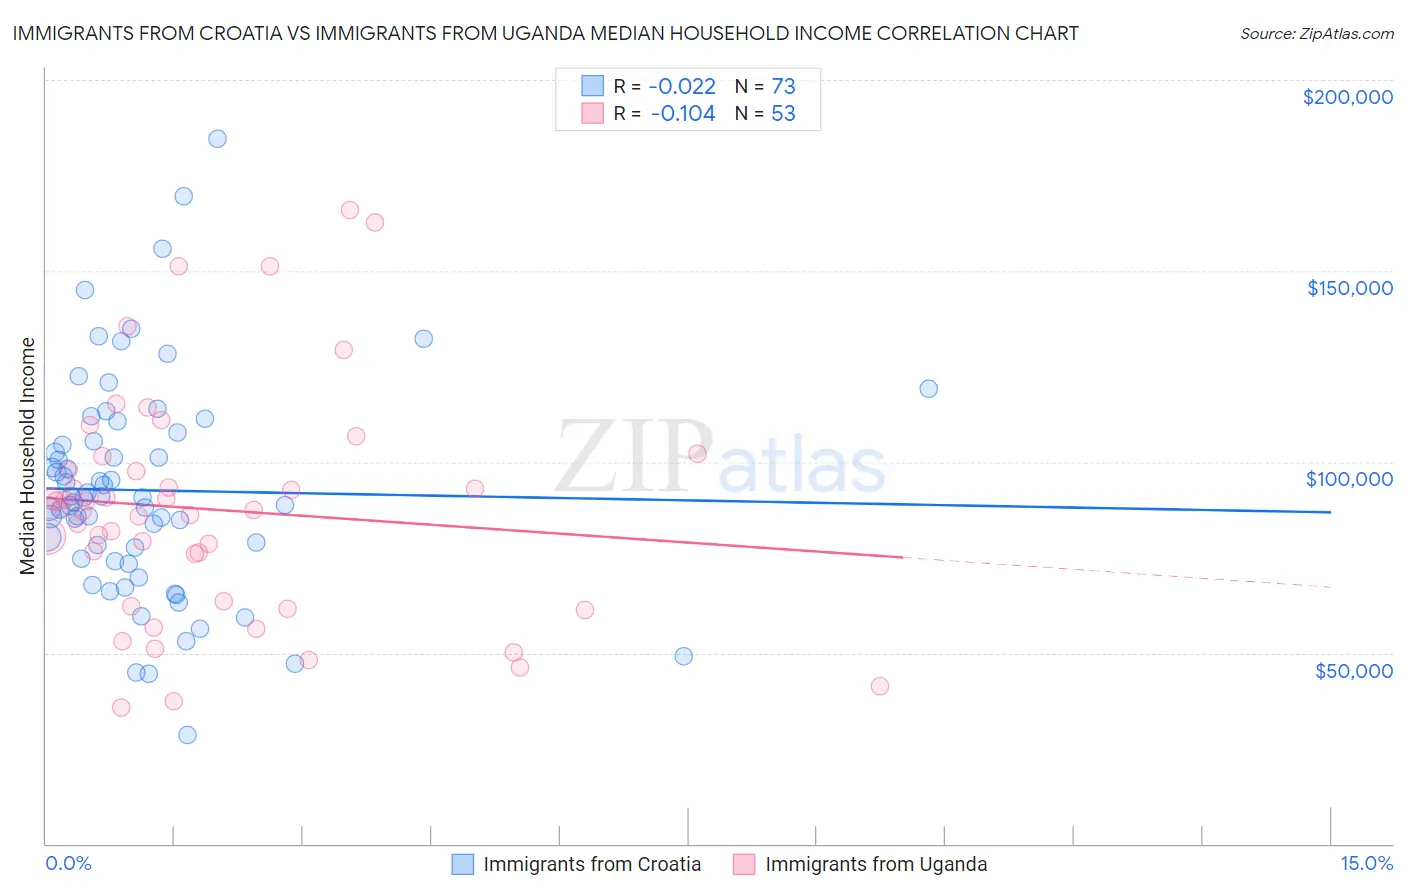 Immigrants from Croatia vs Immigrants from Uganda Median Household Income